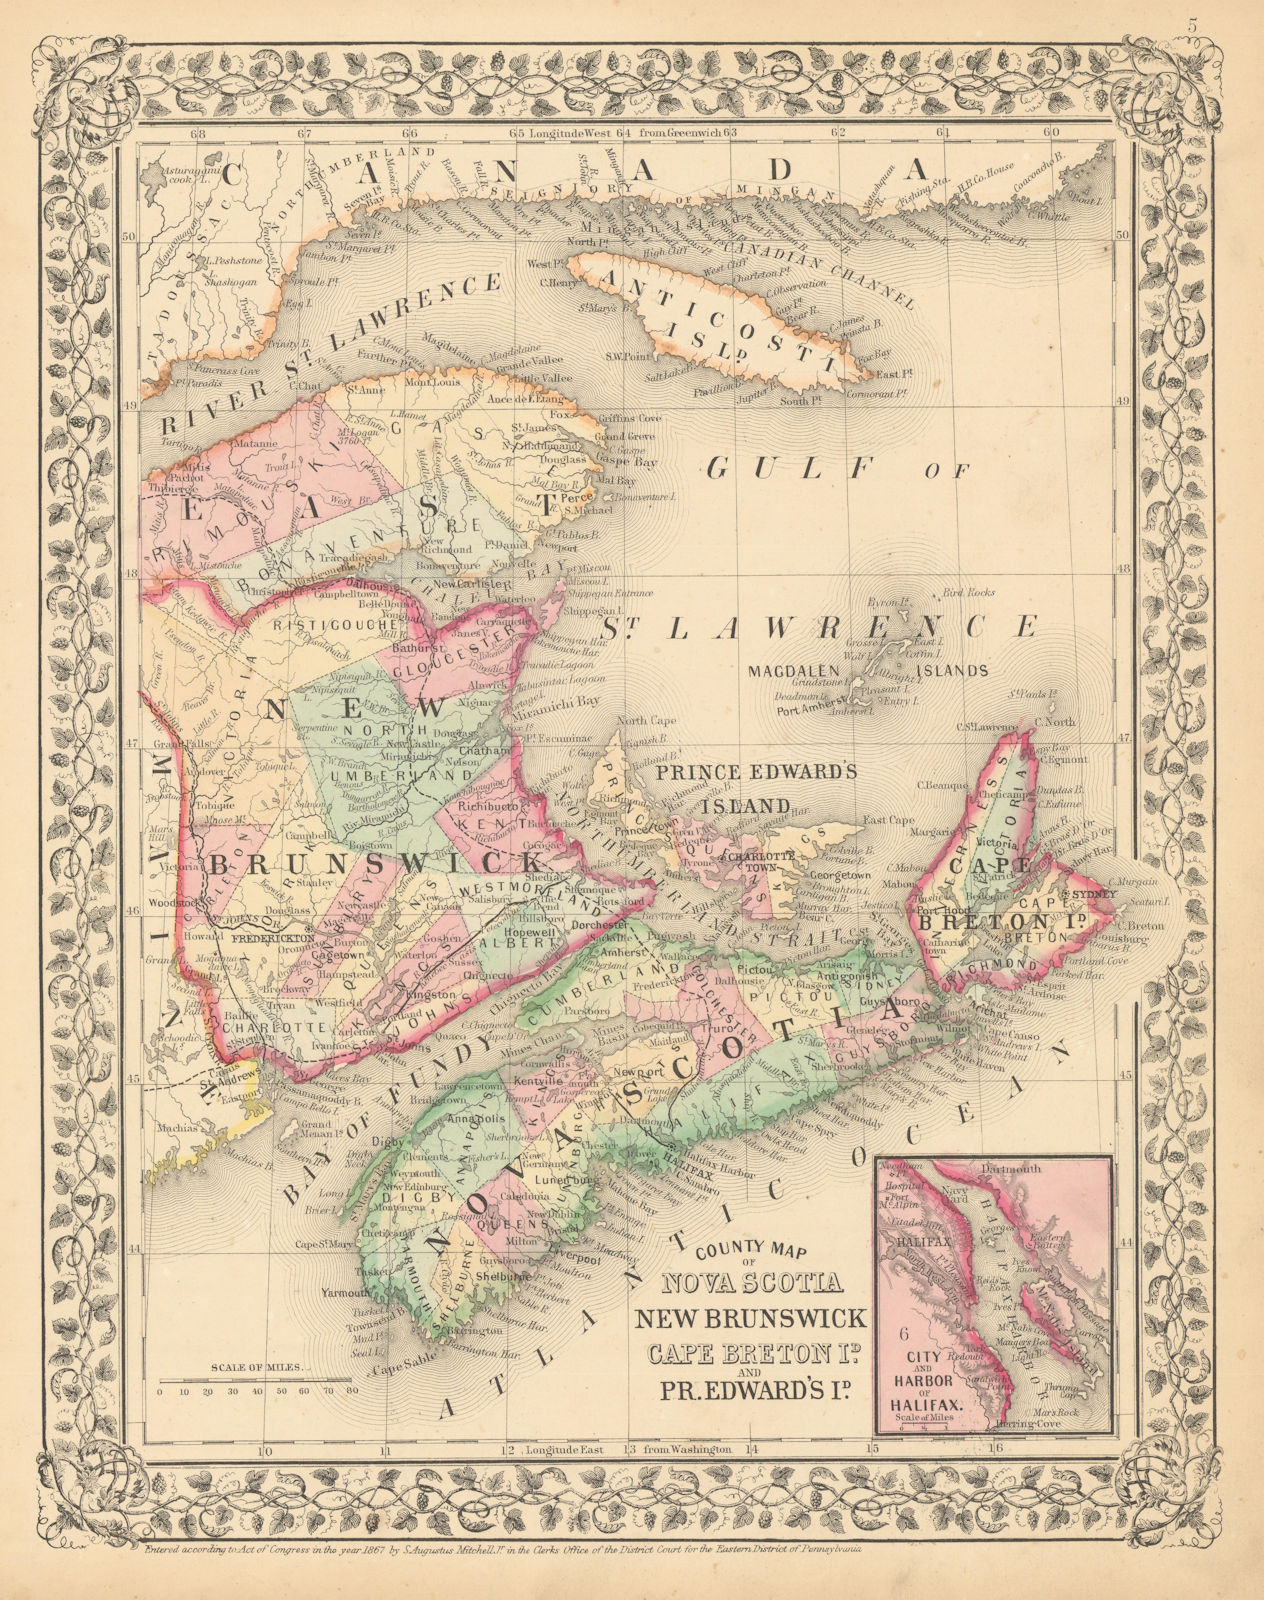 Nova Scotia, New Brunswick, Cape Breton Island & PEI. Canada. MITCHELL 1869 map